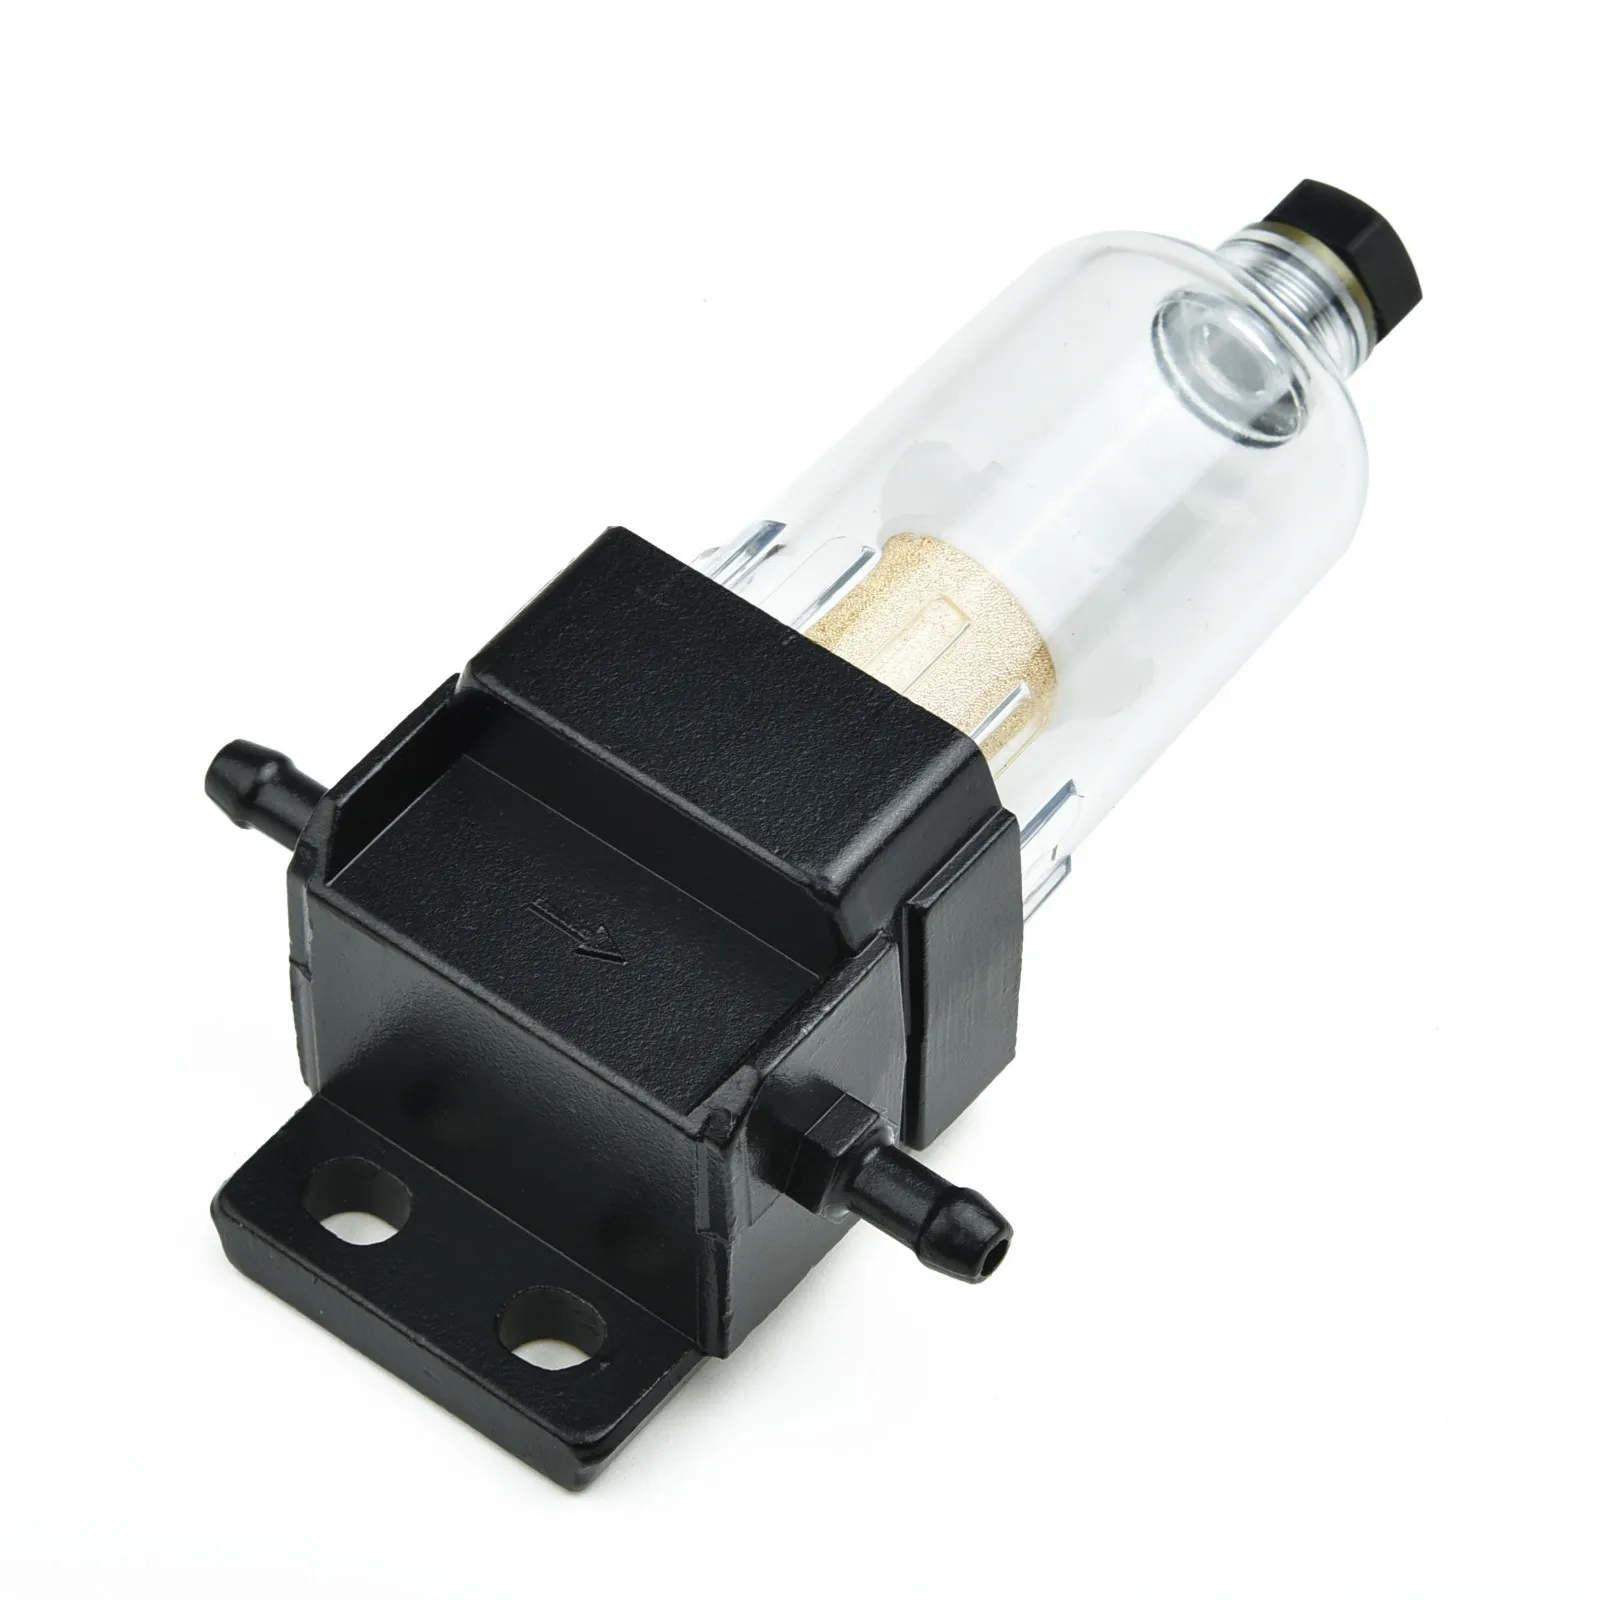 Car Fuel Filter Water Separator Kit For Webasto Eberspacher Heater Water Separator Diesel&Biodiesel Car Fuel Engine  Accessories